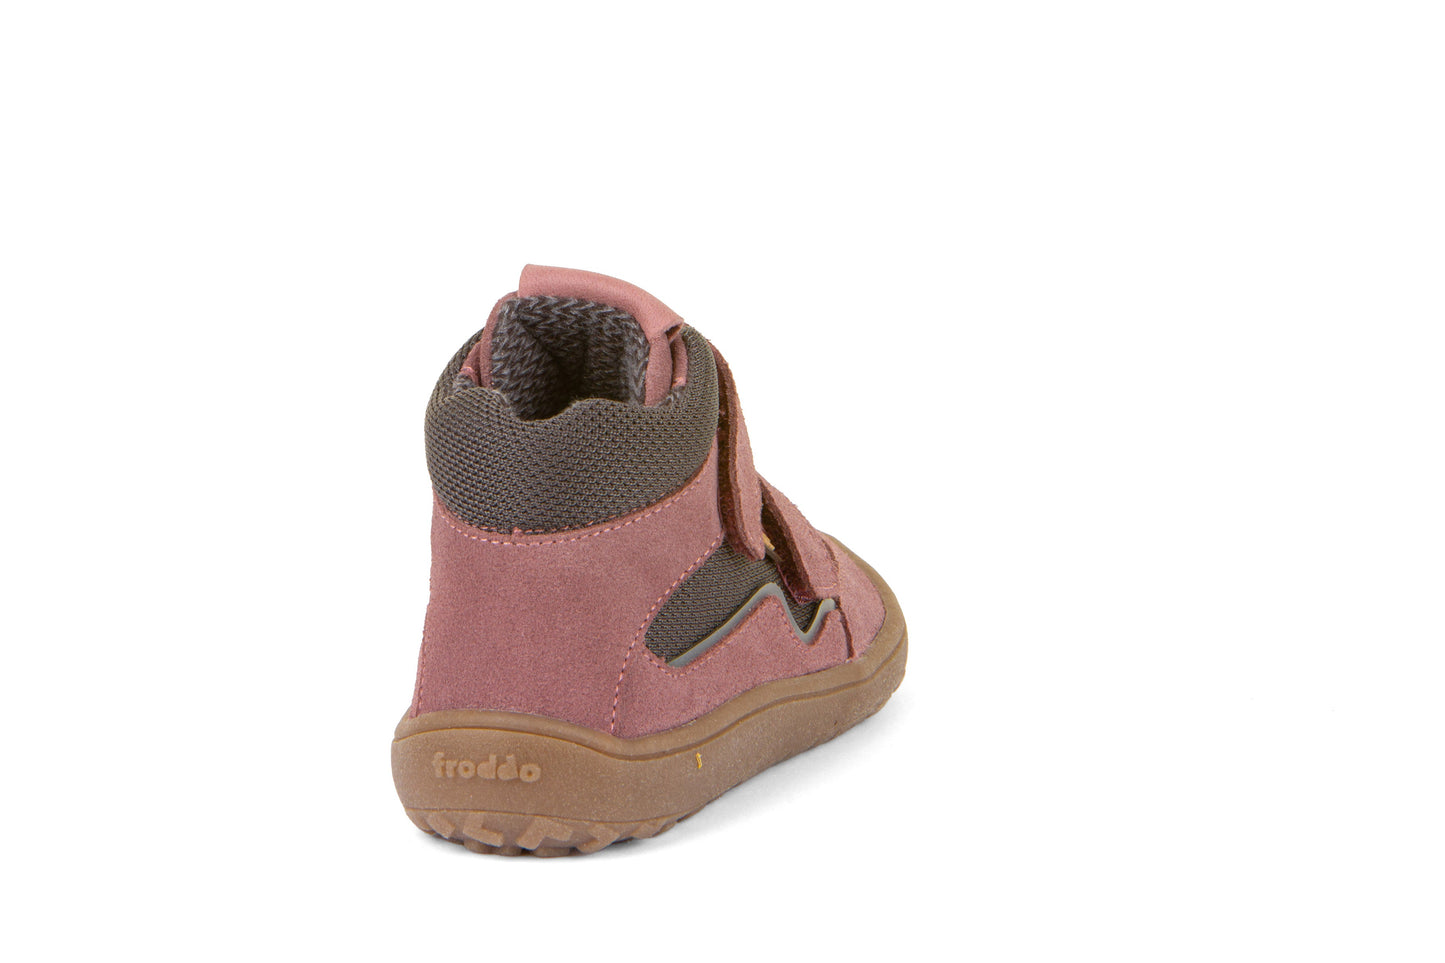 Froddo Barefoot Botines Resistentes al agua - Grey Pink